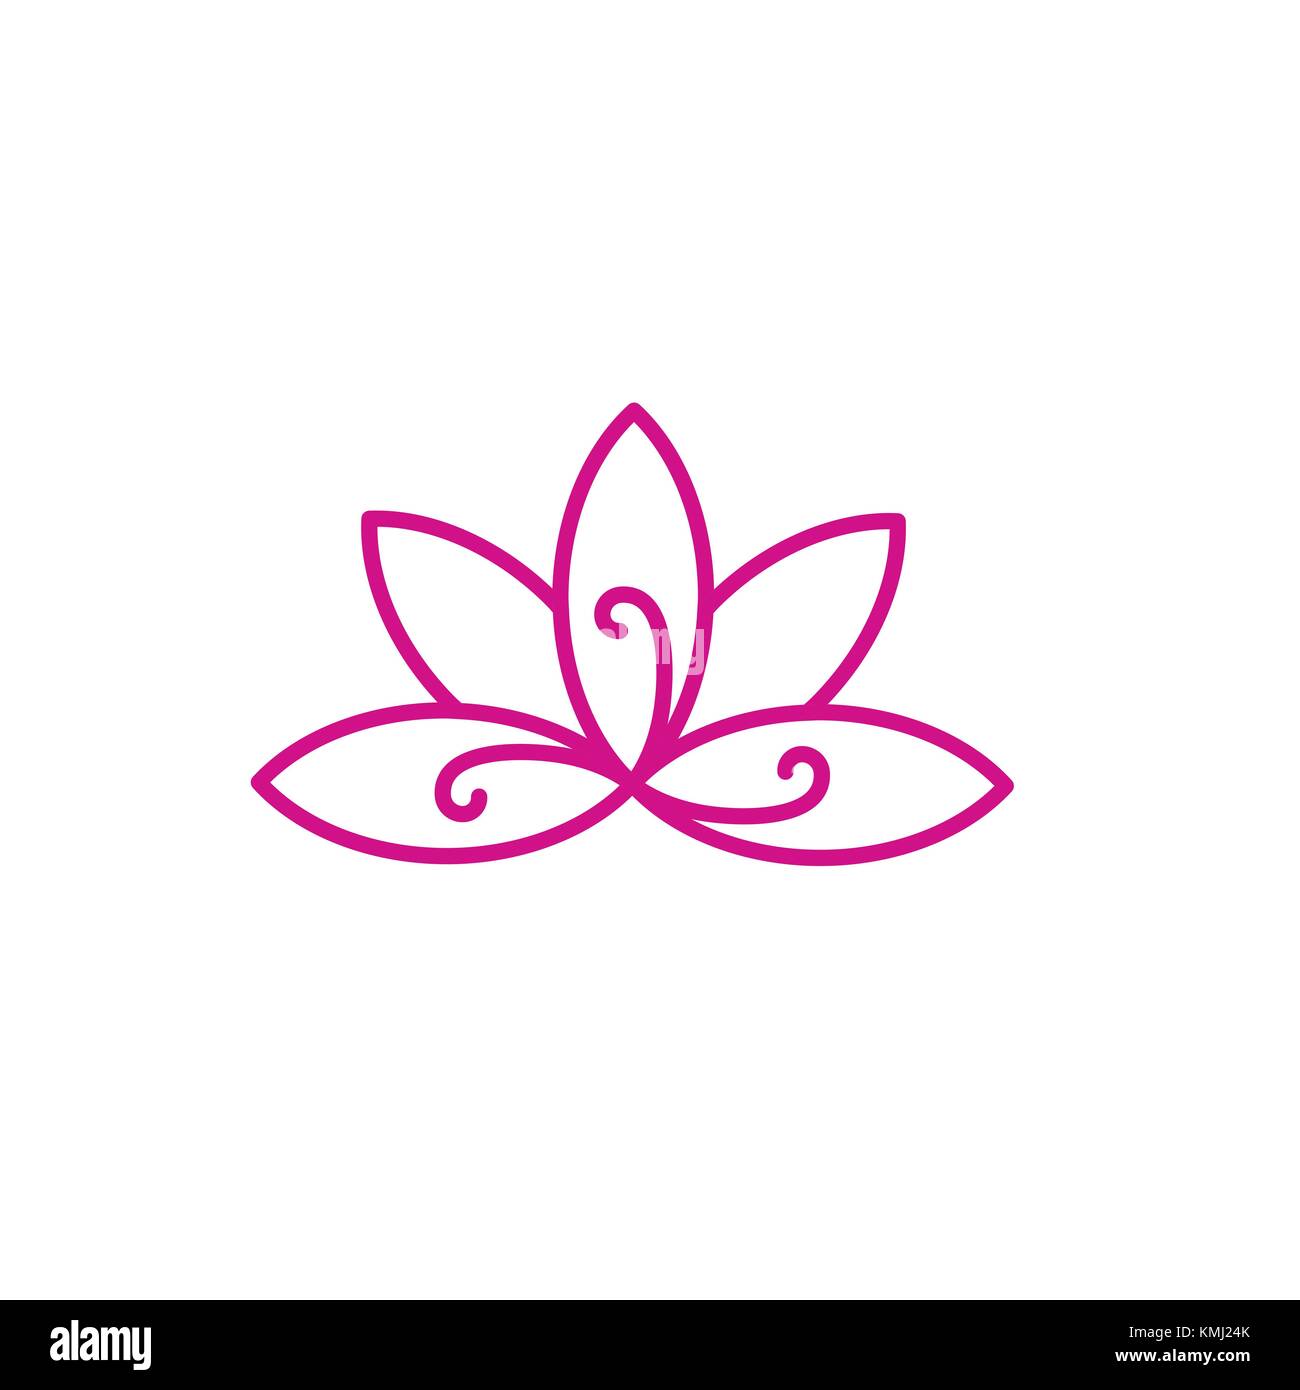 Zen Meditation Mandala Design Symbol Concept with Swirly Yoga Embellishments Stock Vector